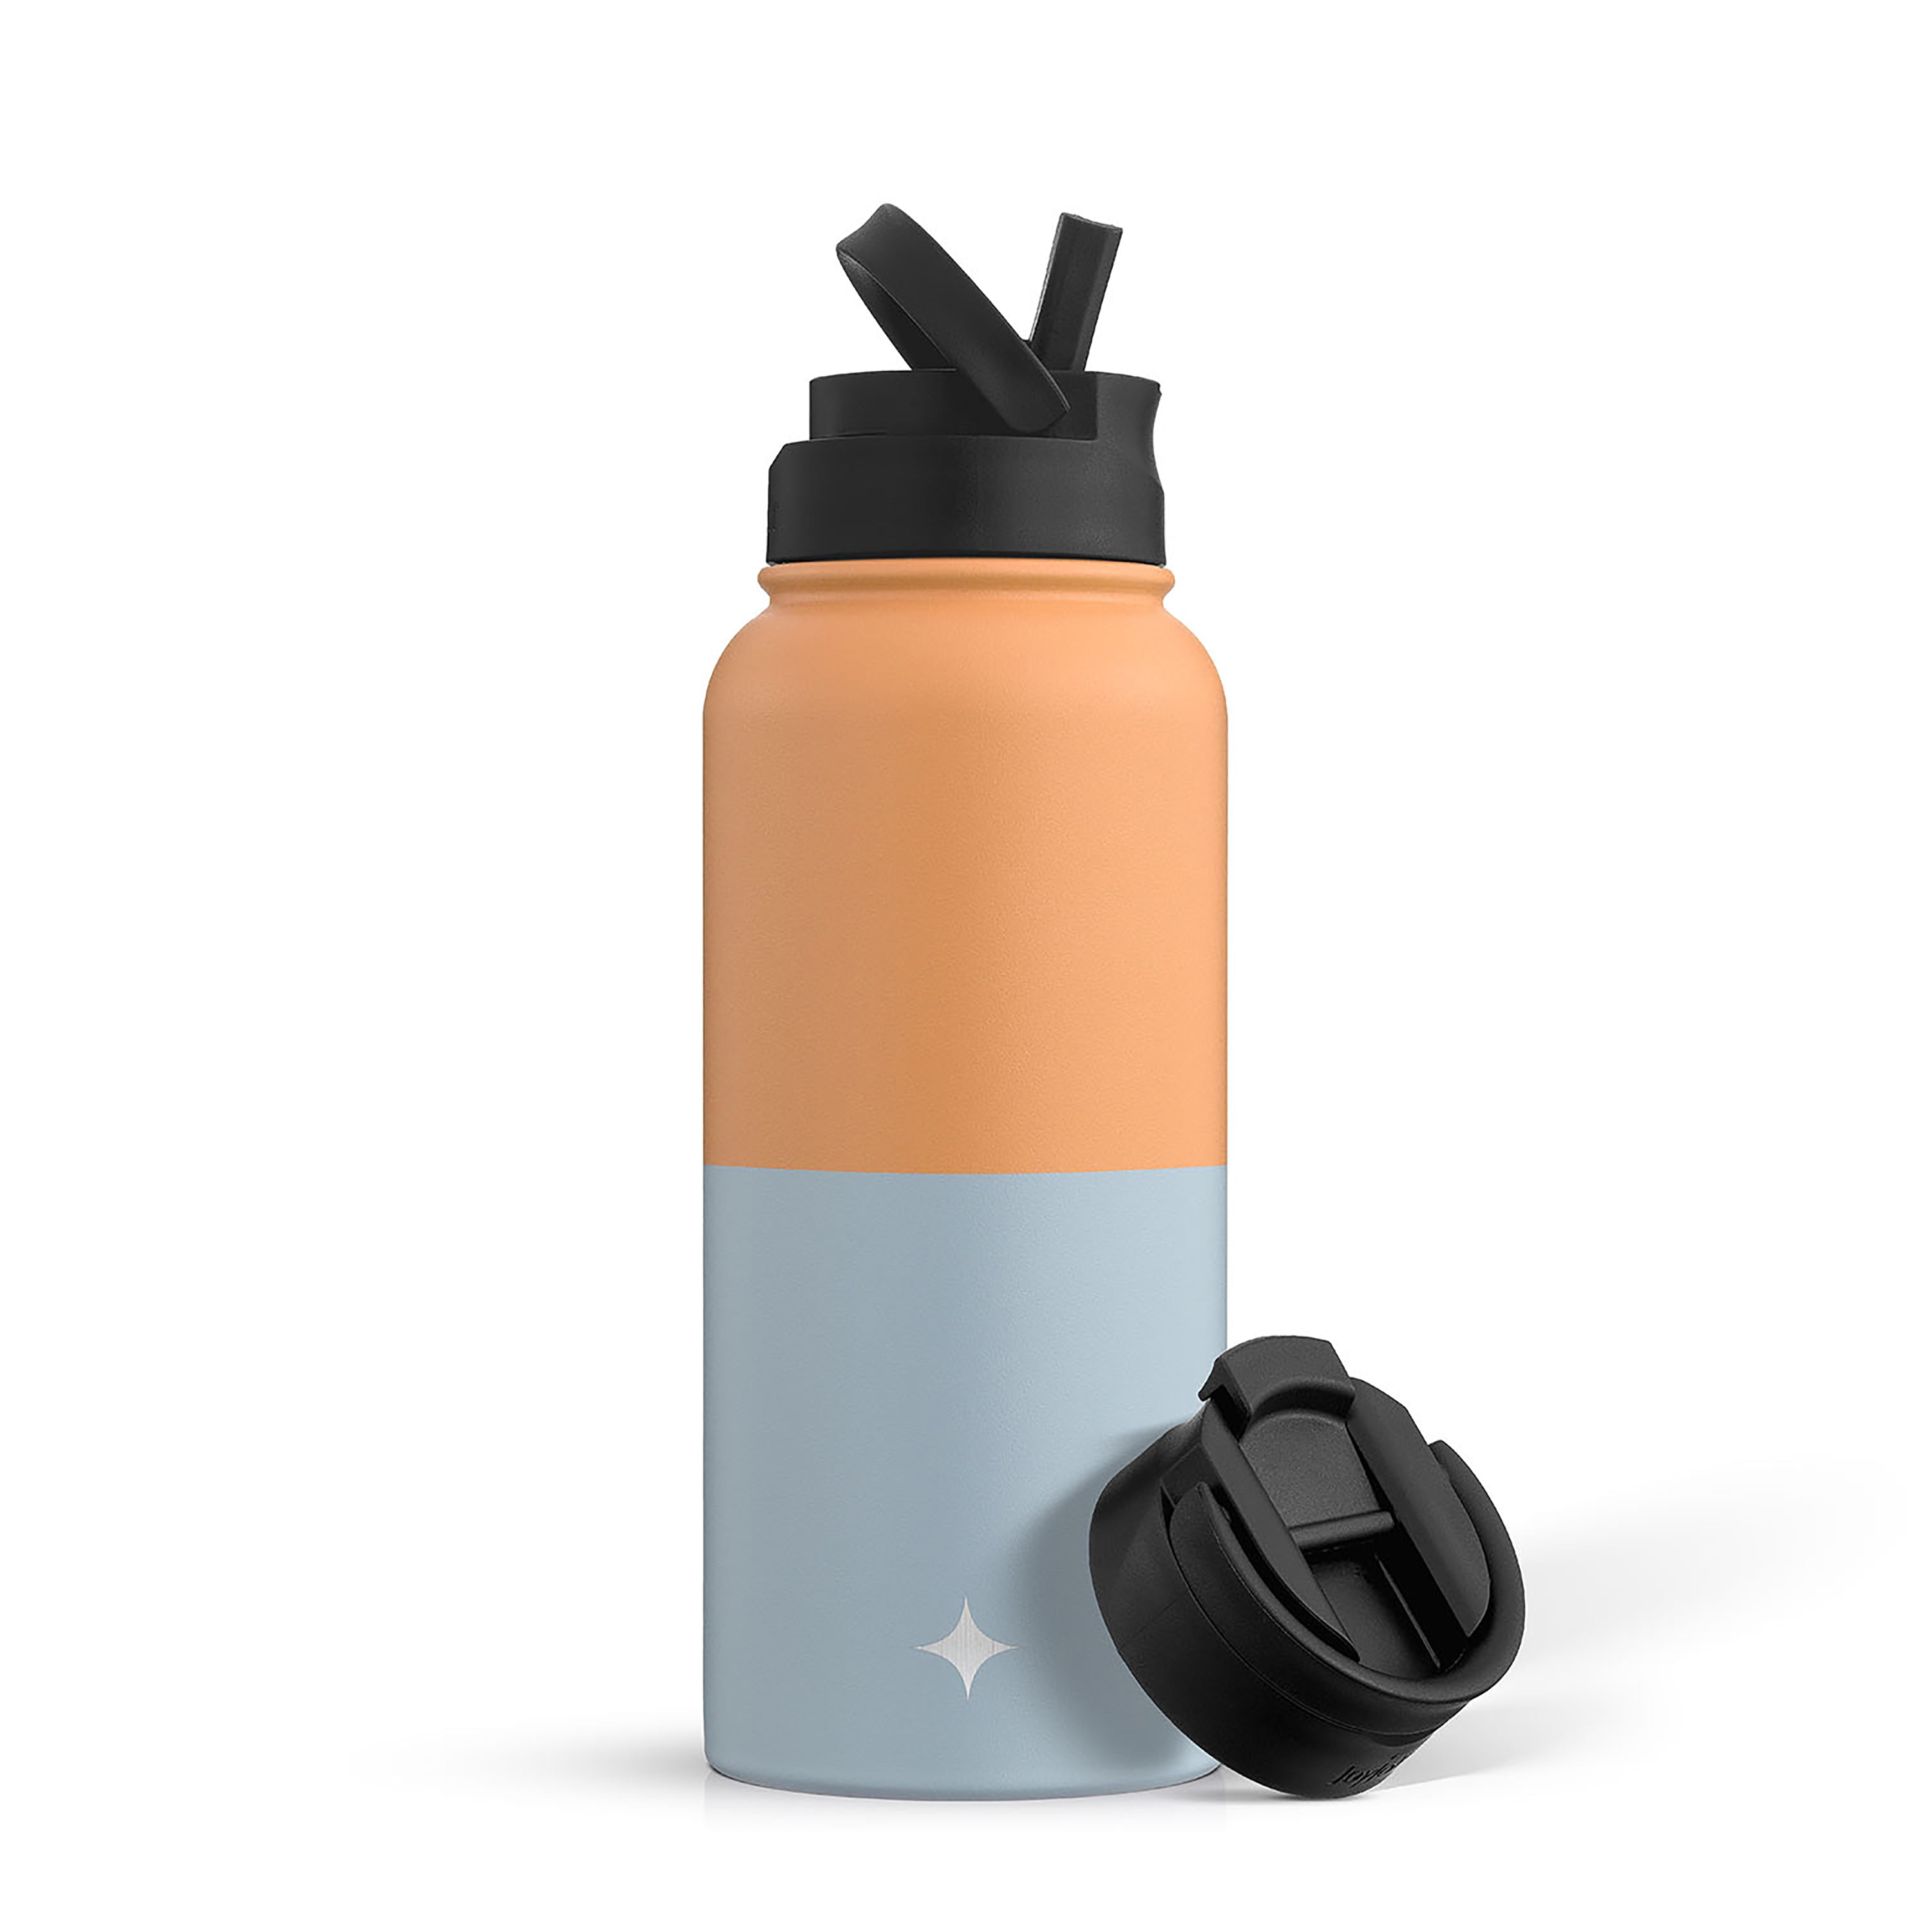 JoyJolt Vacuum Insulated Water Bottle with Flip Lid & Sport Straw Lid - 32 oz